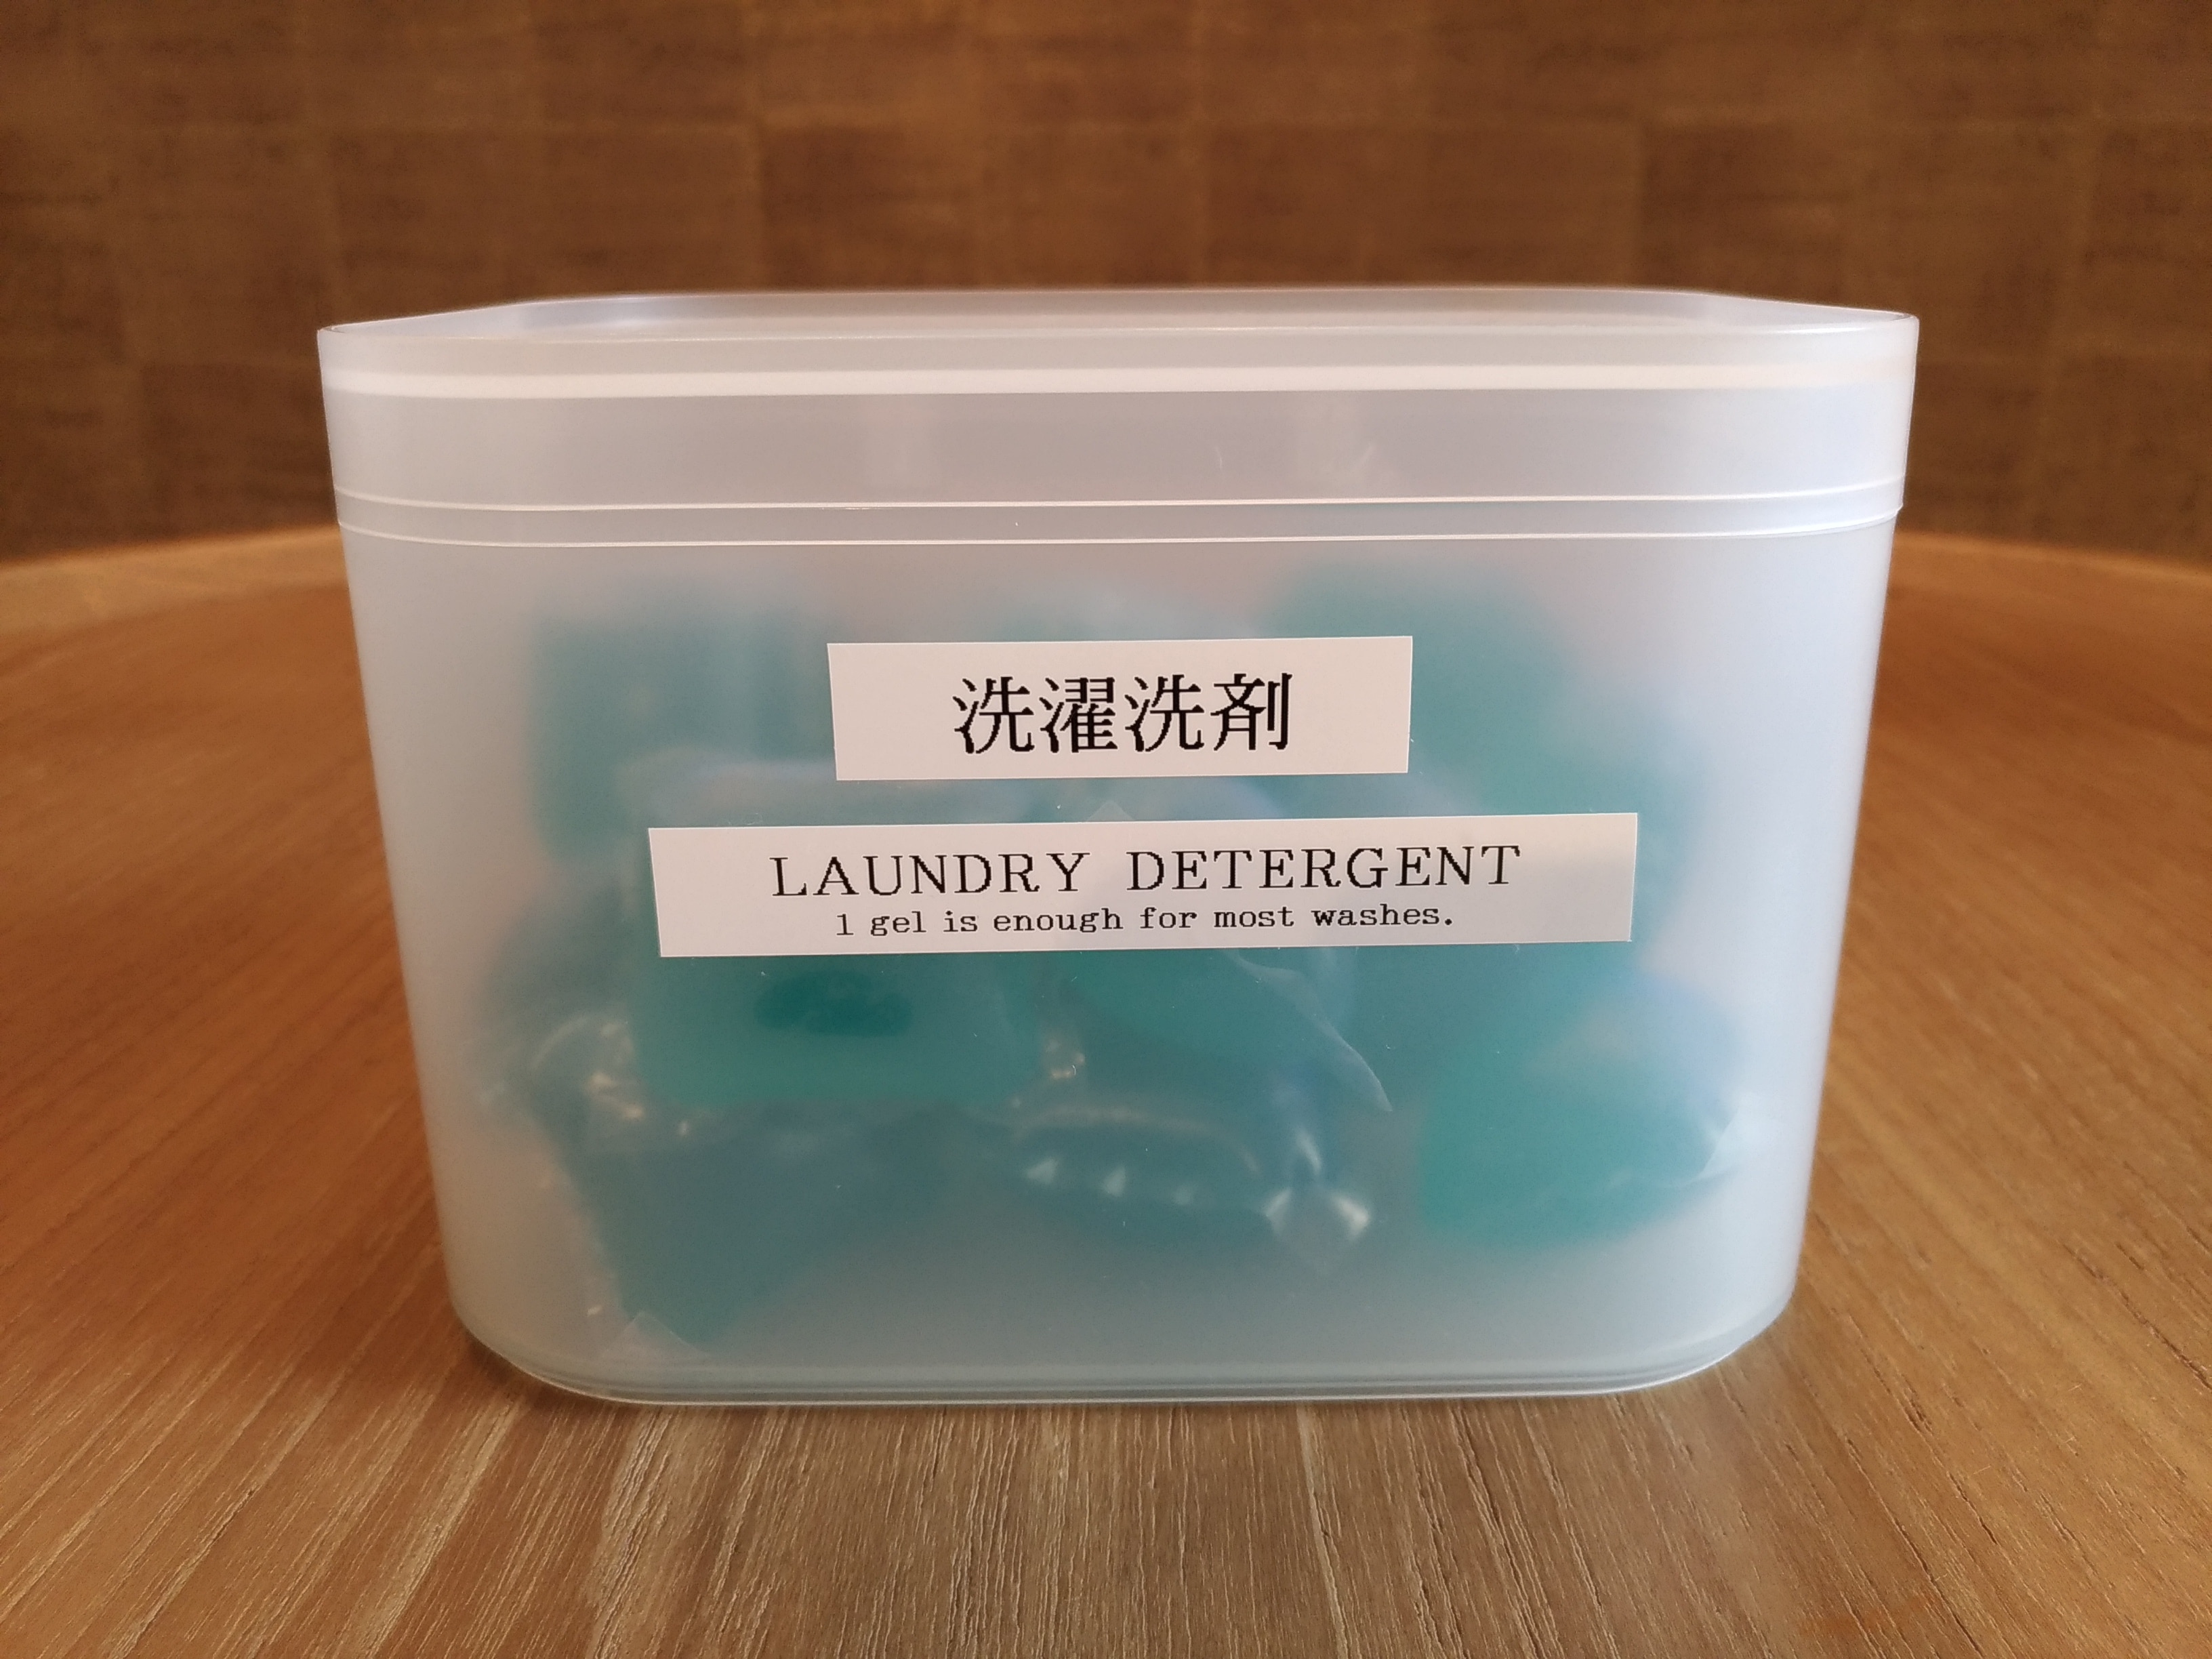 Laundry detergent * Free